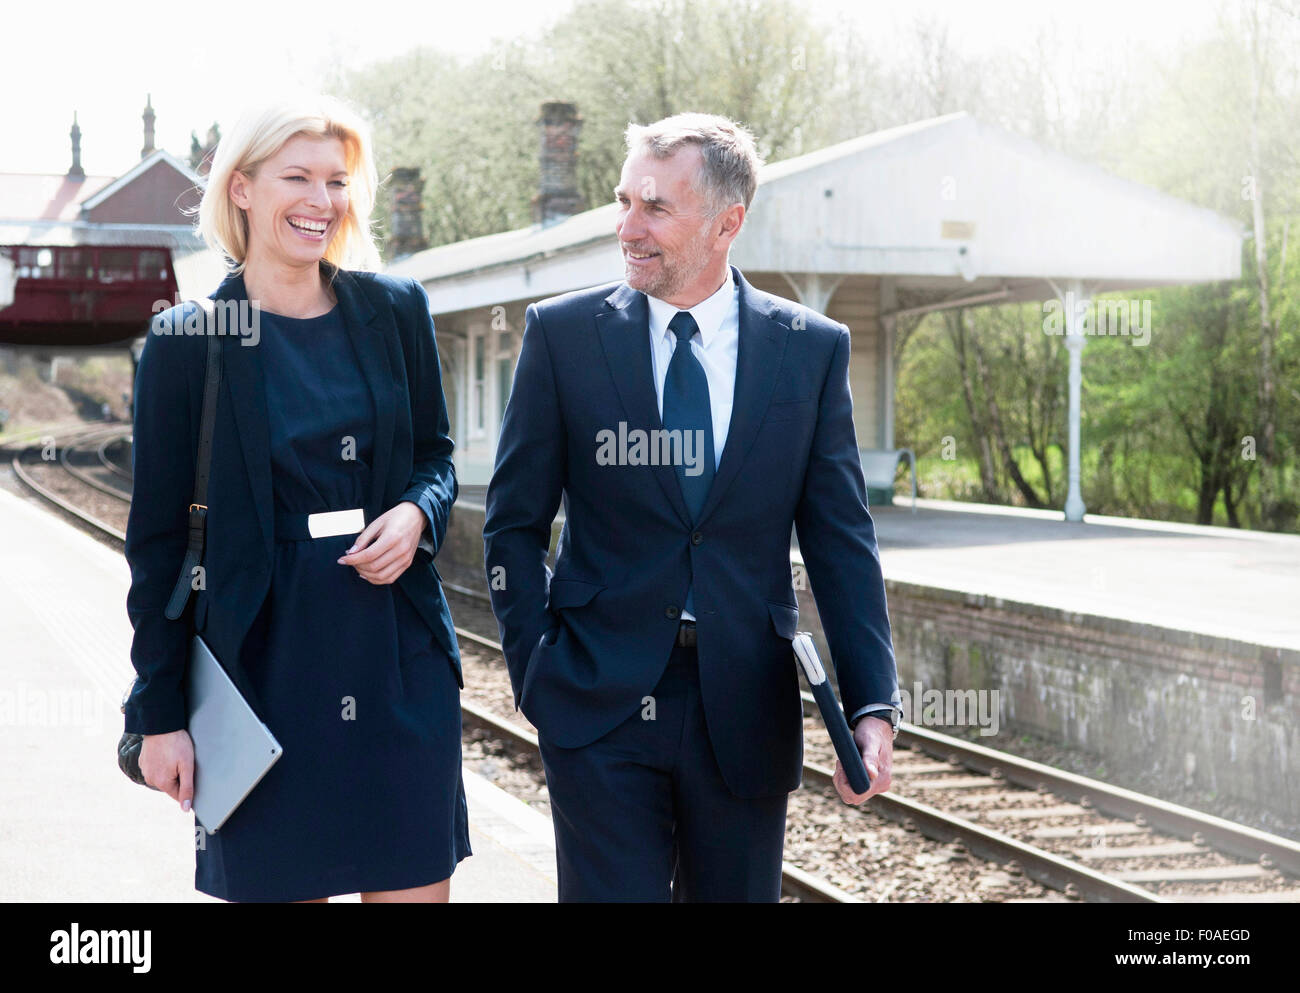 Businessman and woman talking on railway platform Stock Photo